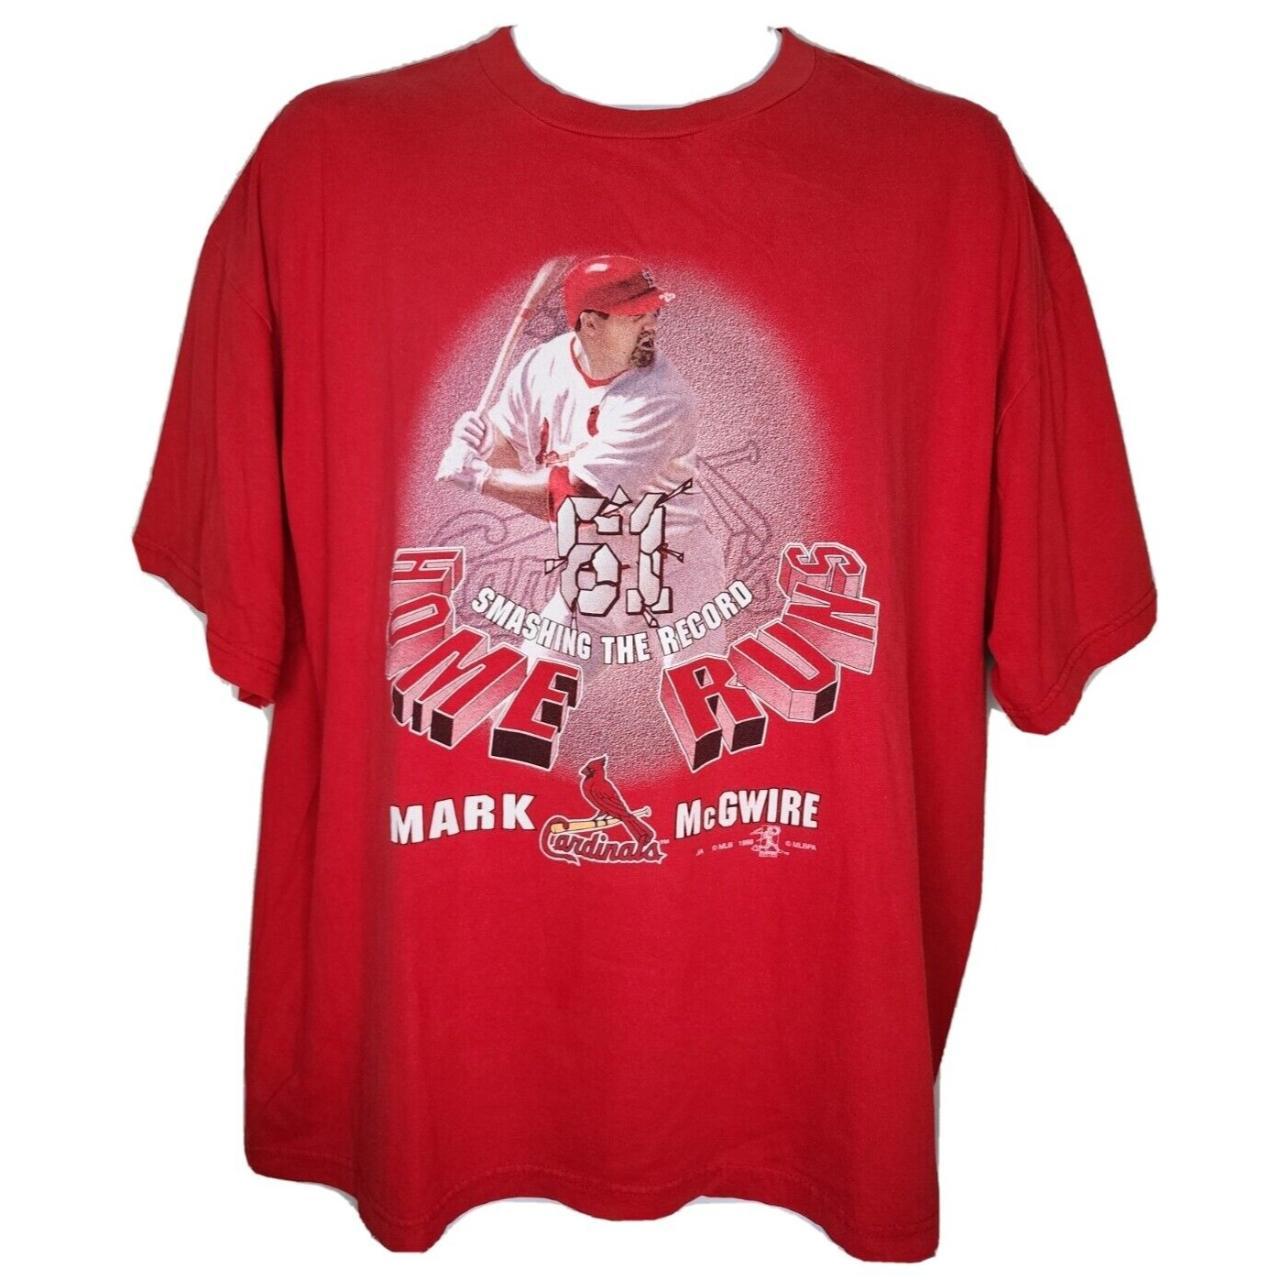 Vintage 90s St. Louis Cardinals MLB mark McGwire player T shirt mens XL